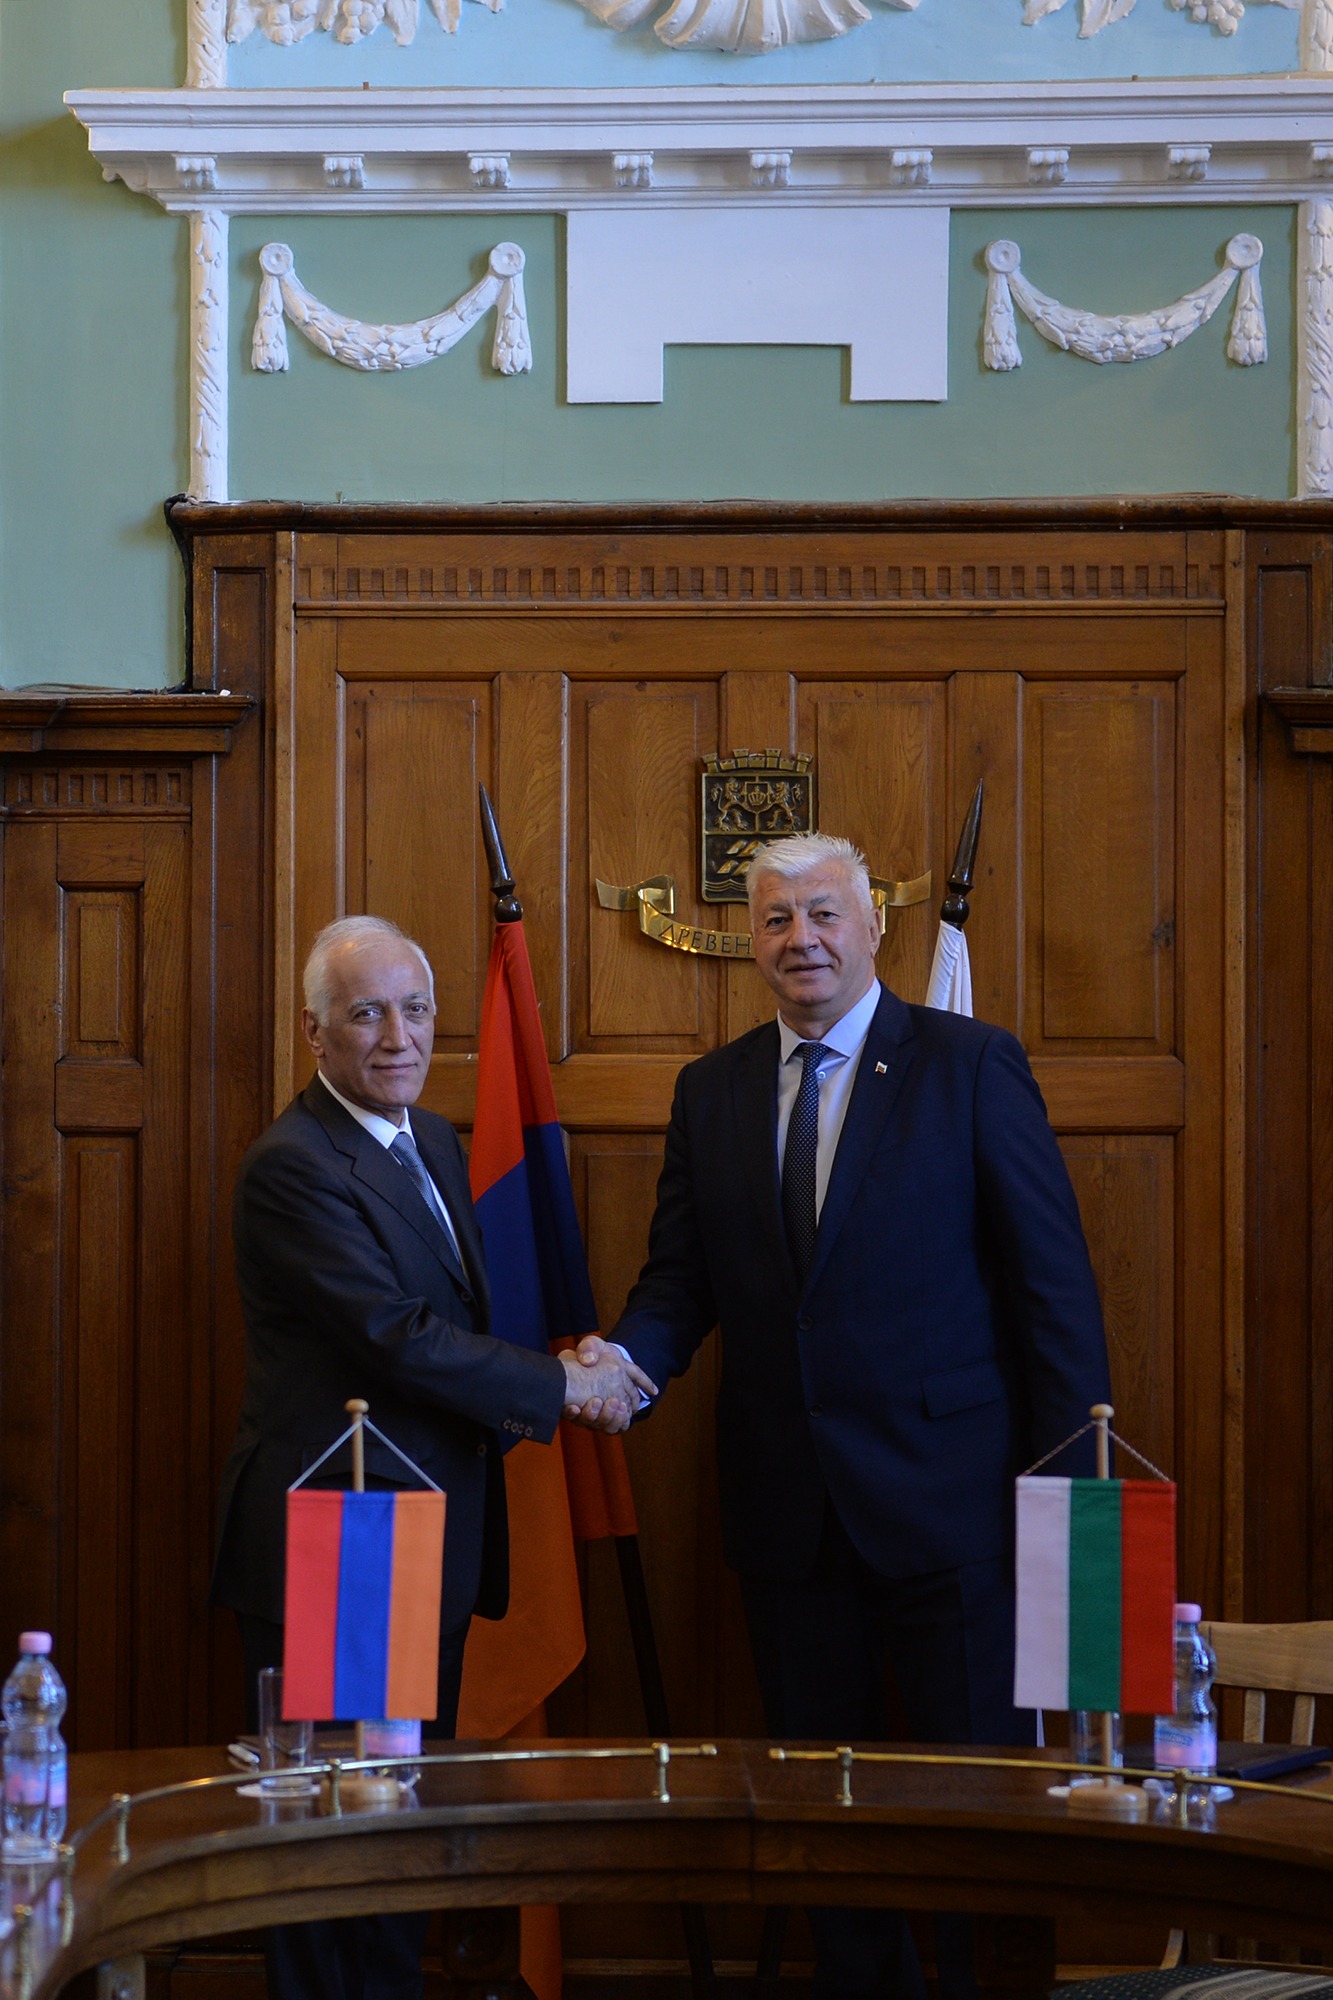 President Vahagn Khachatuyan had a meeting with the Mayor of Plovdiv Zdravko Dimitrov